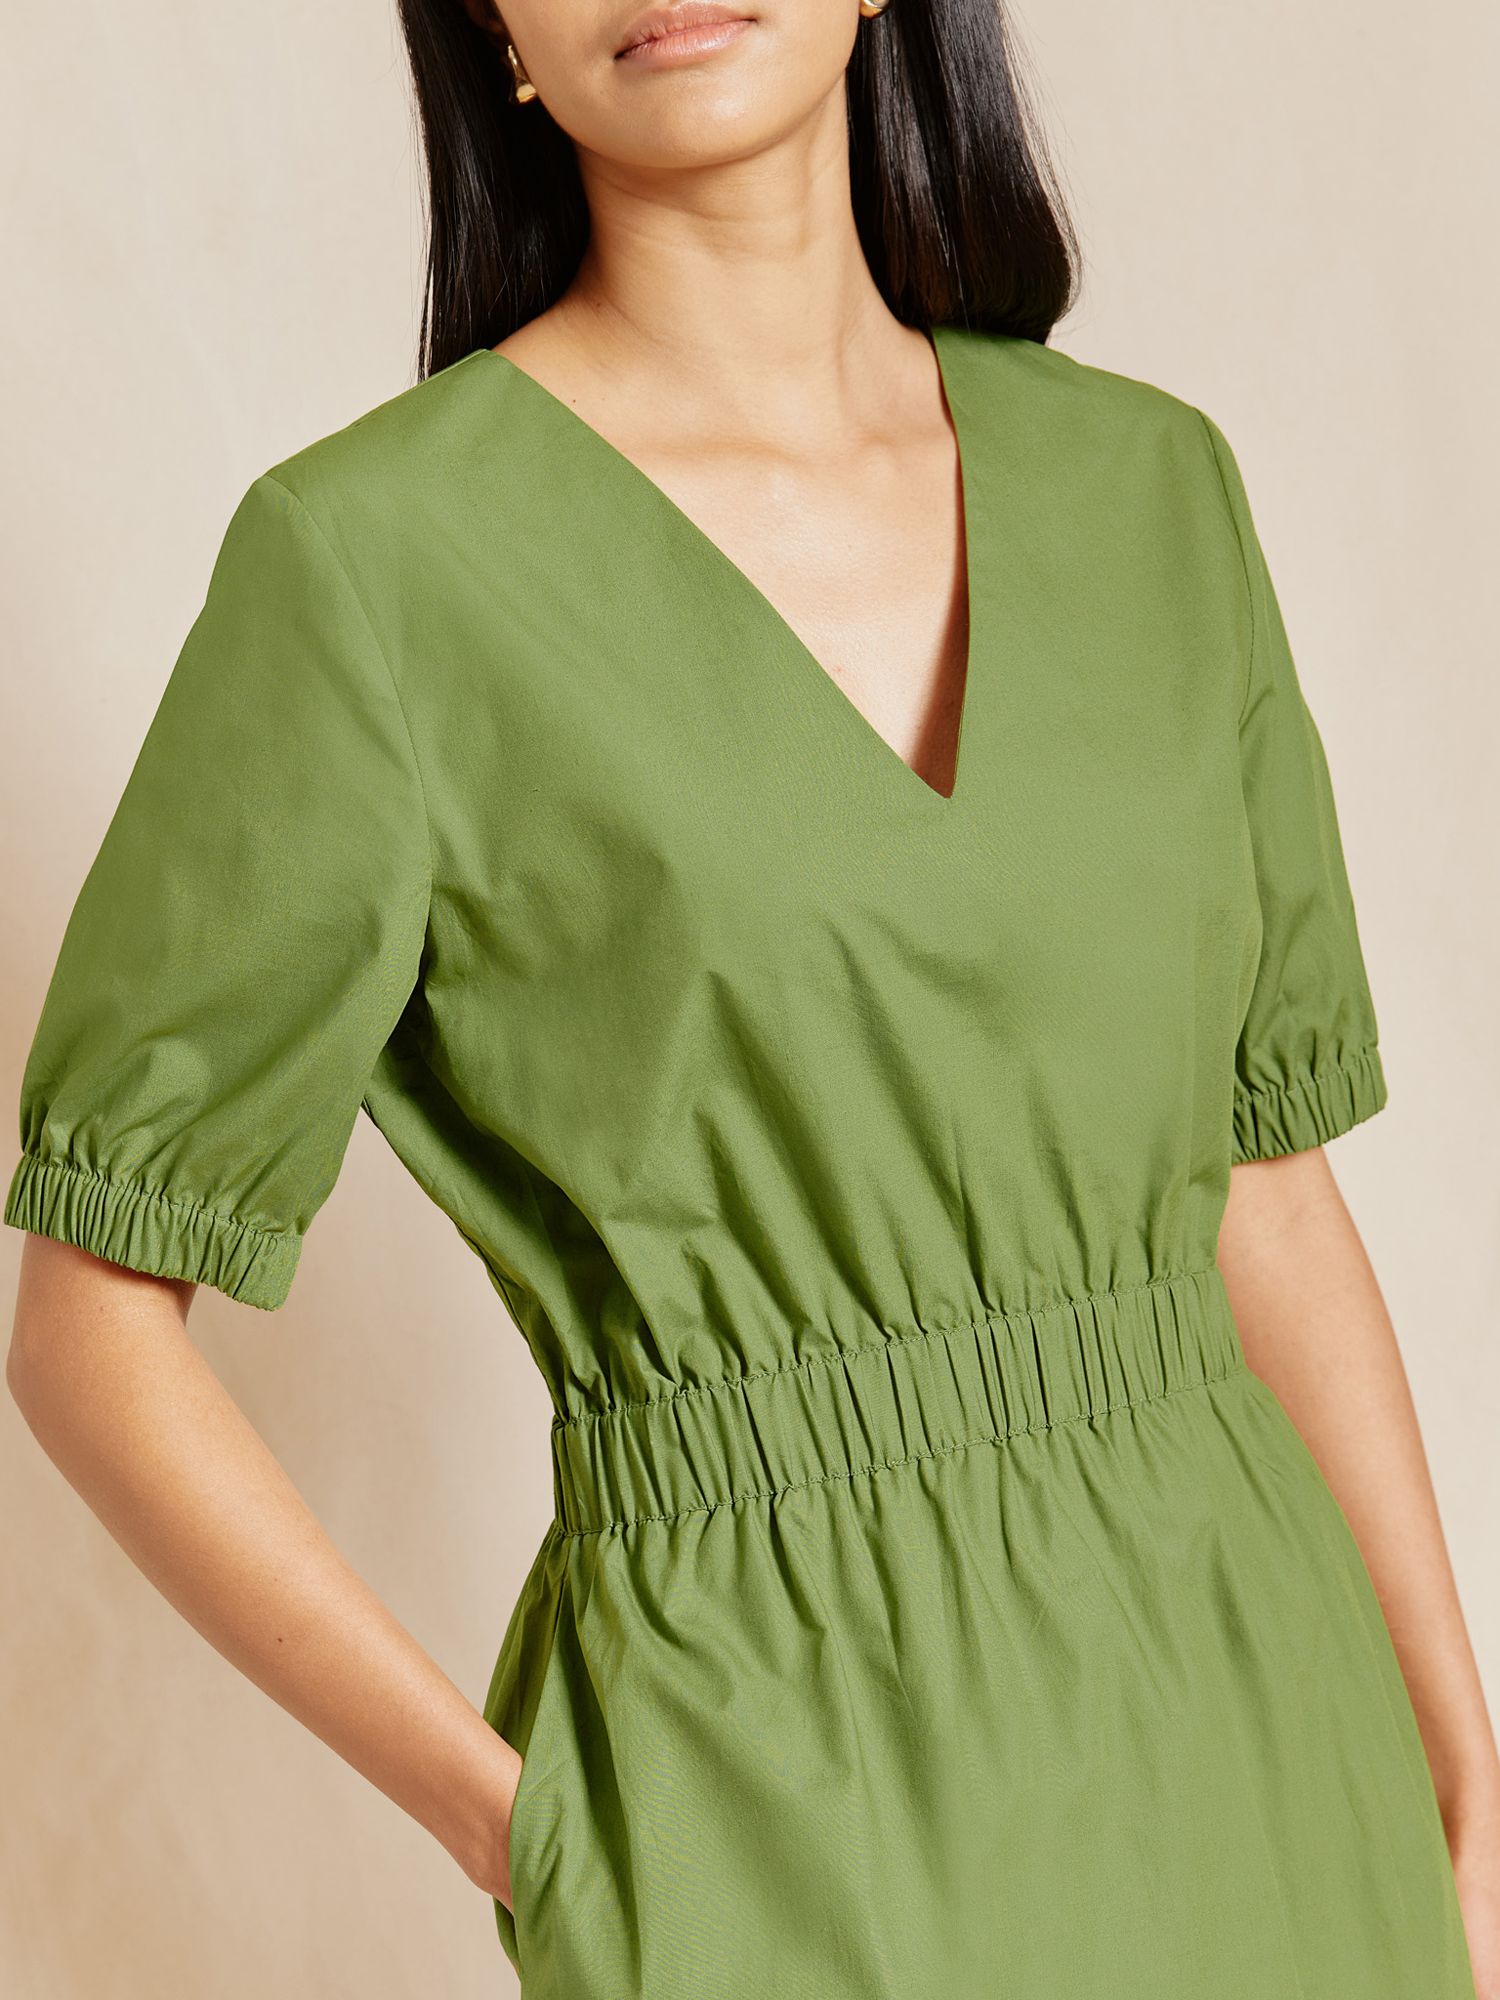 Albaray Organic Cotton Elastic Waist Dress, Green, 8